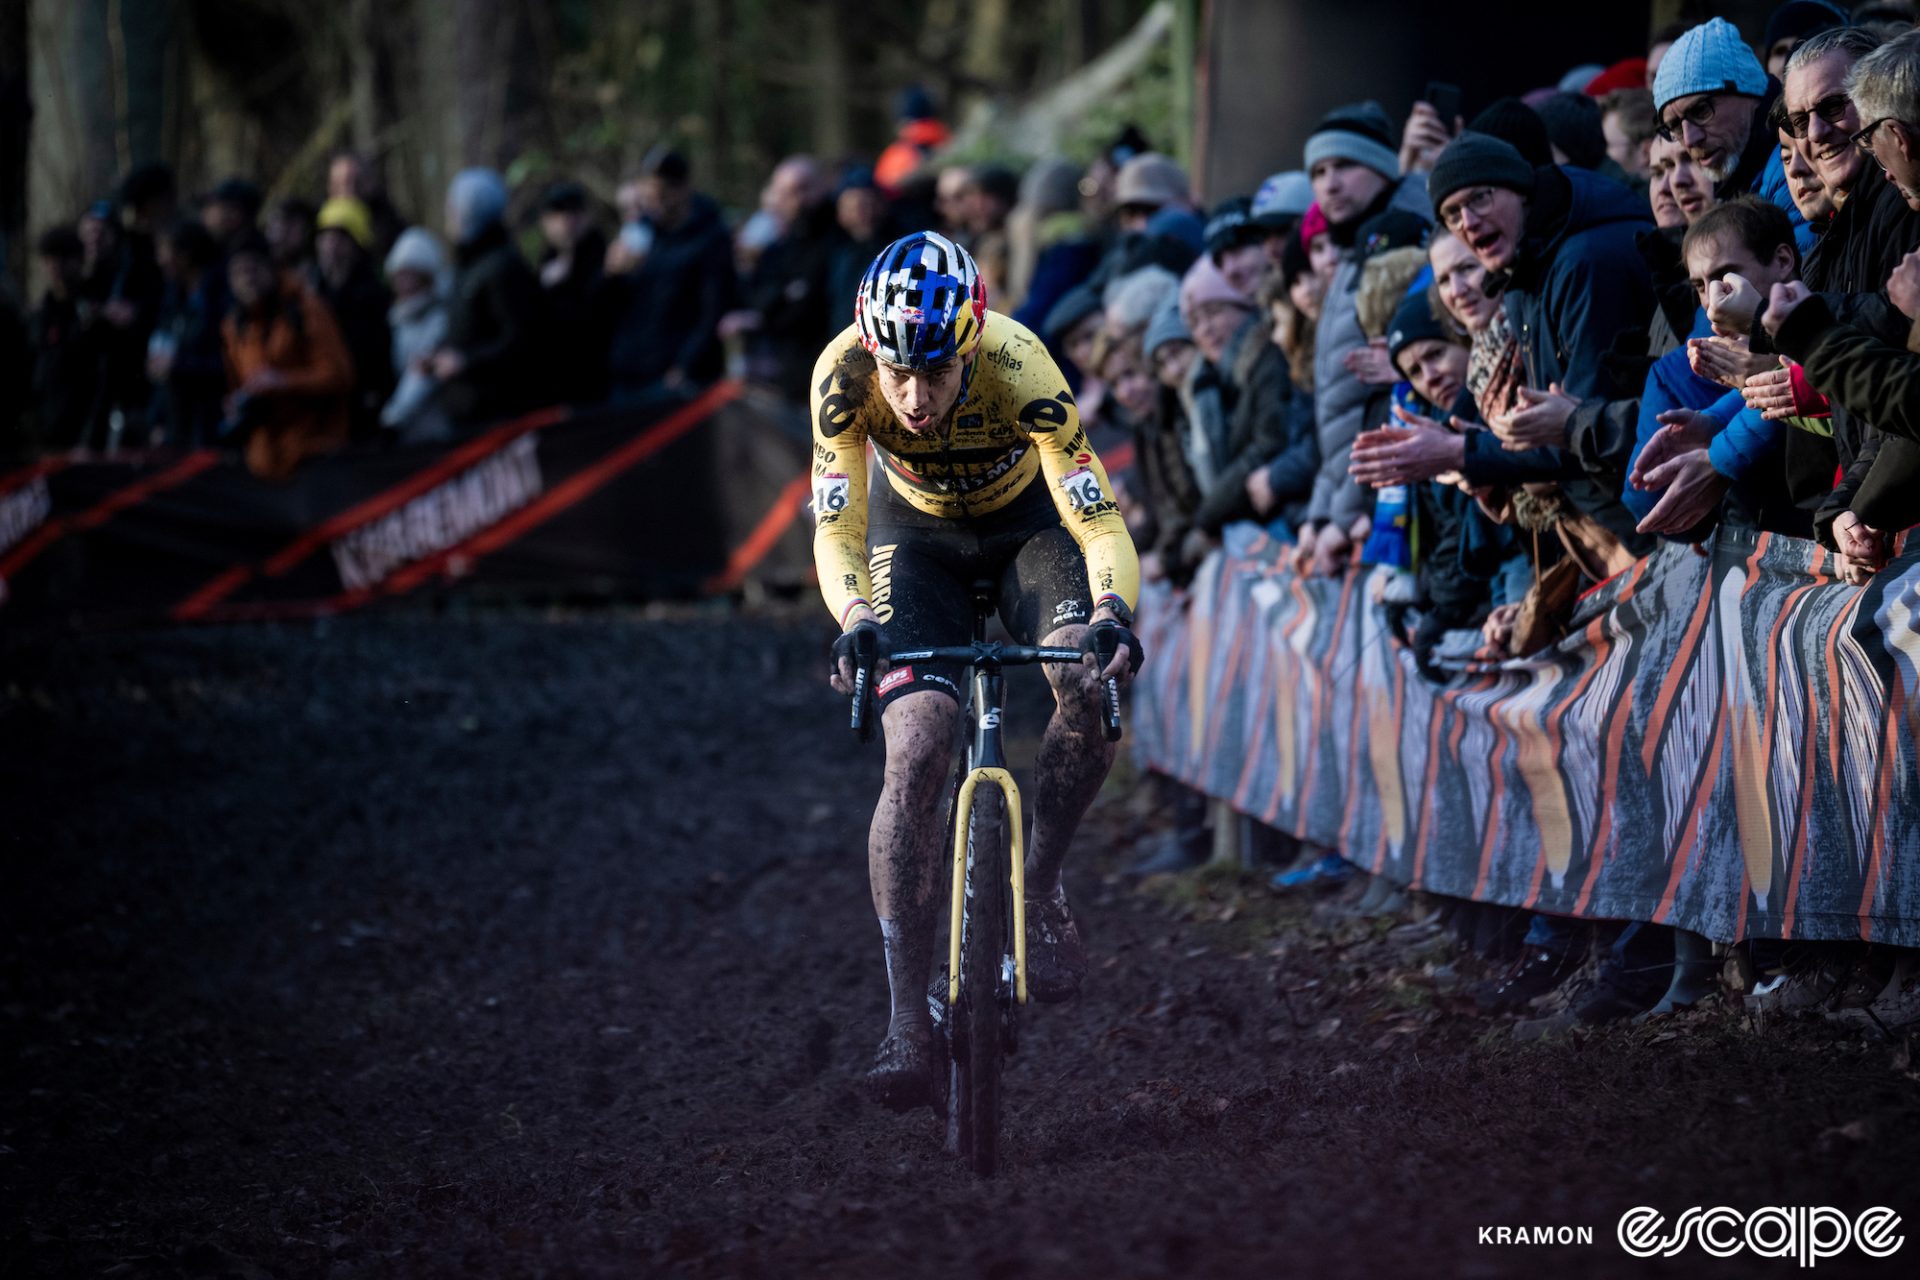 Wout van Aert is alone chasing in the mud.